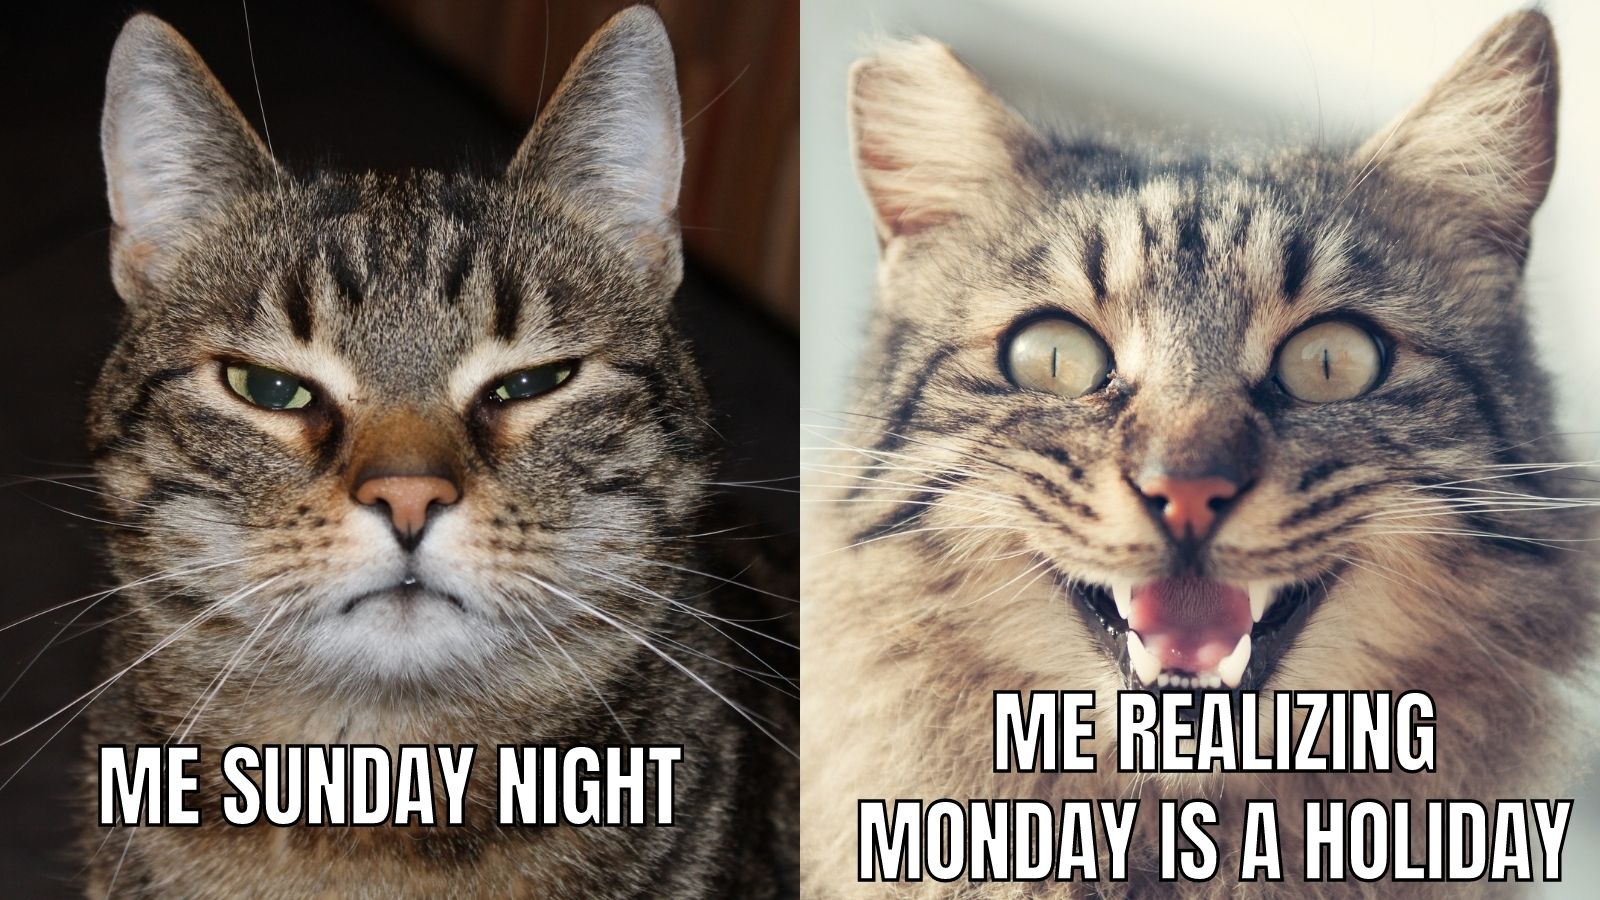 Me Sunday night ,realizing Monday is a holiday !